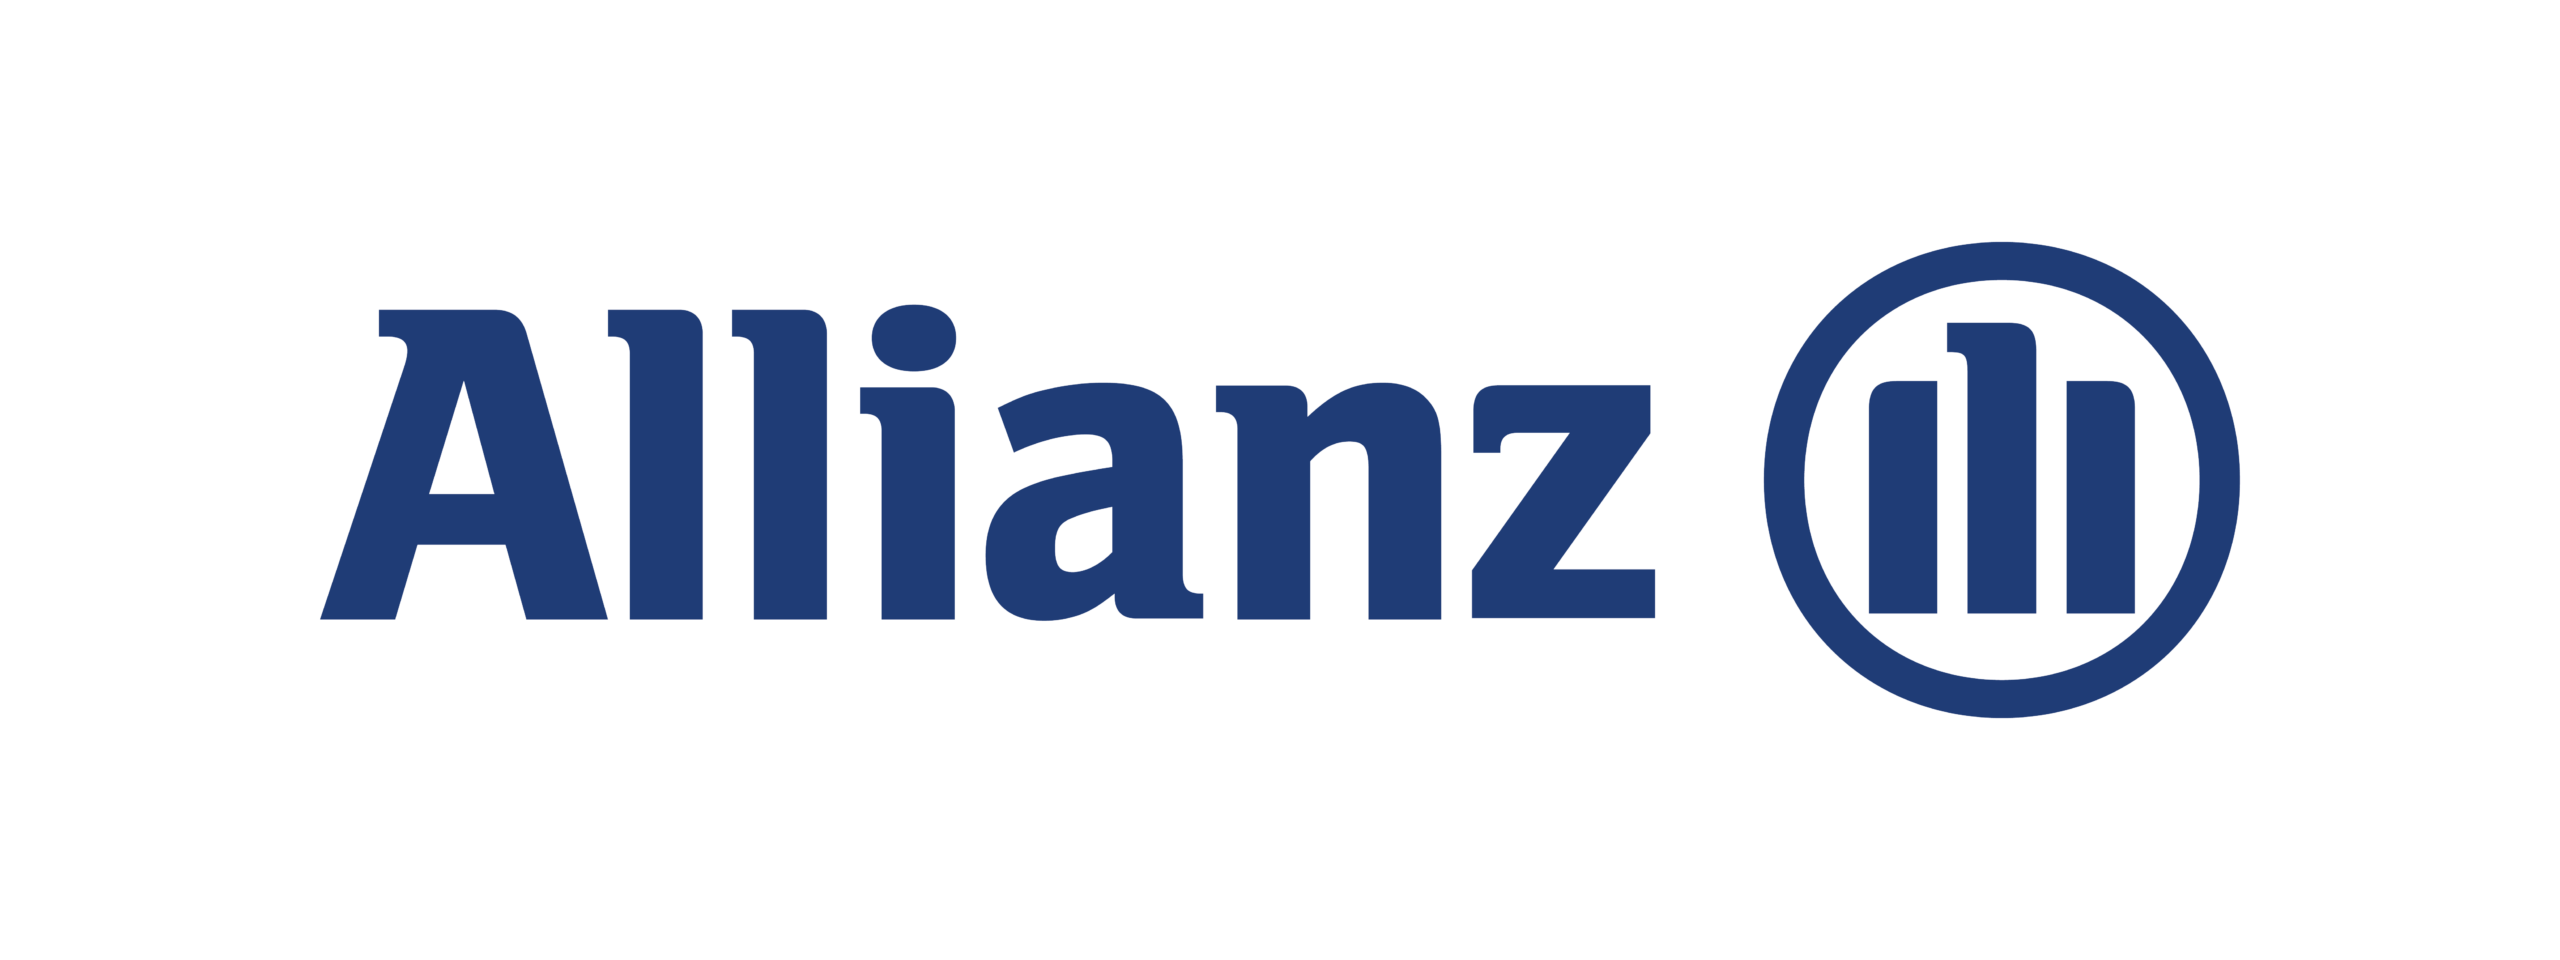 allianz logo no background